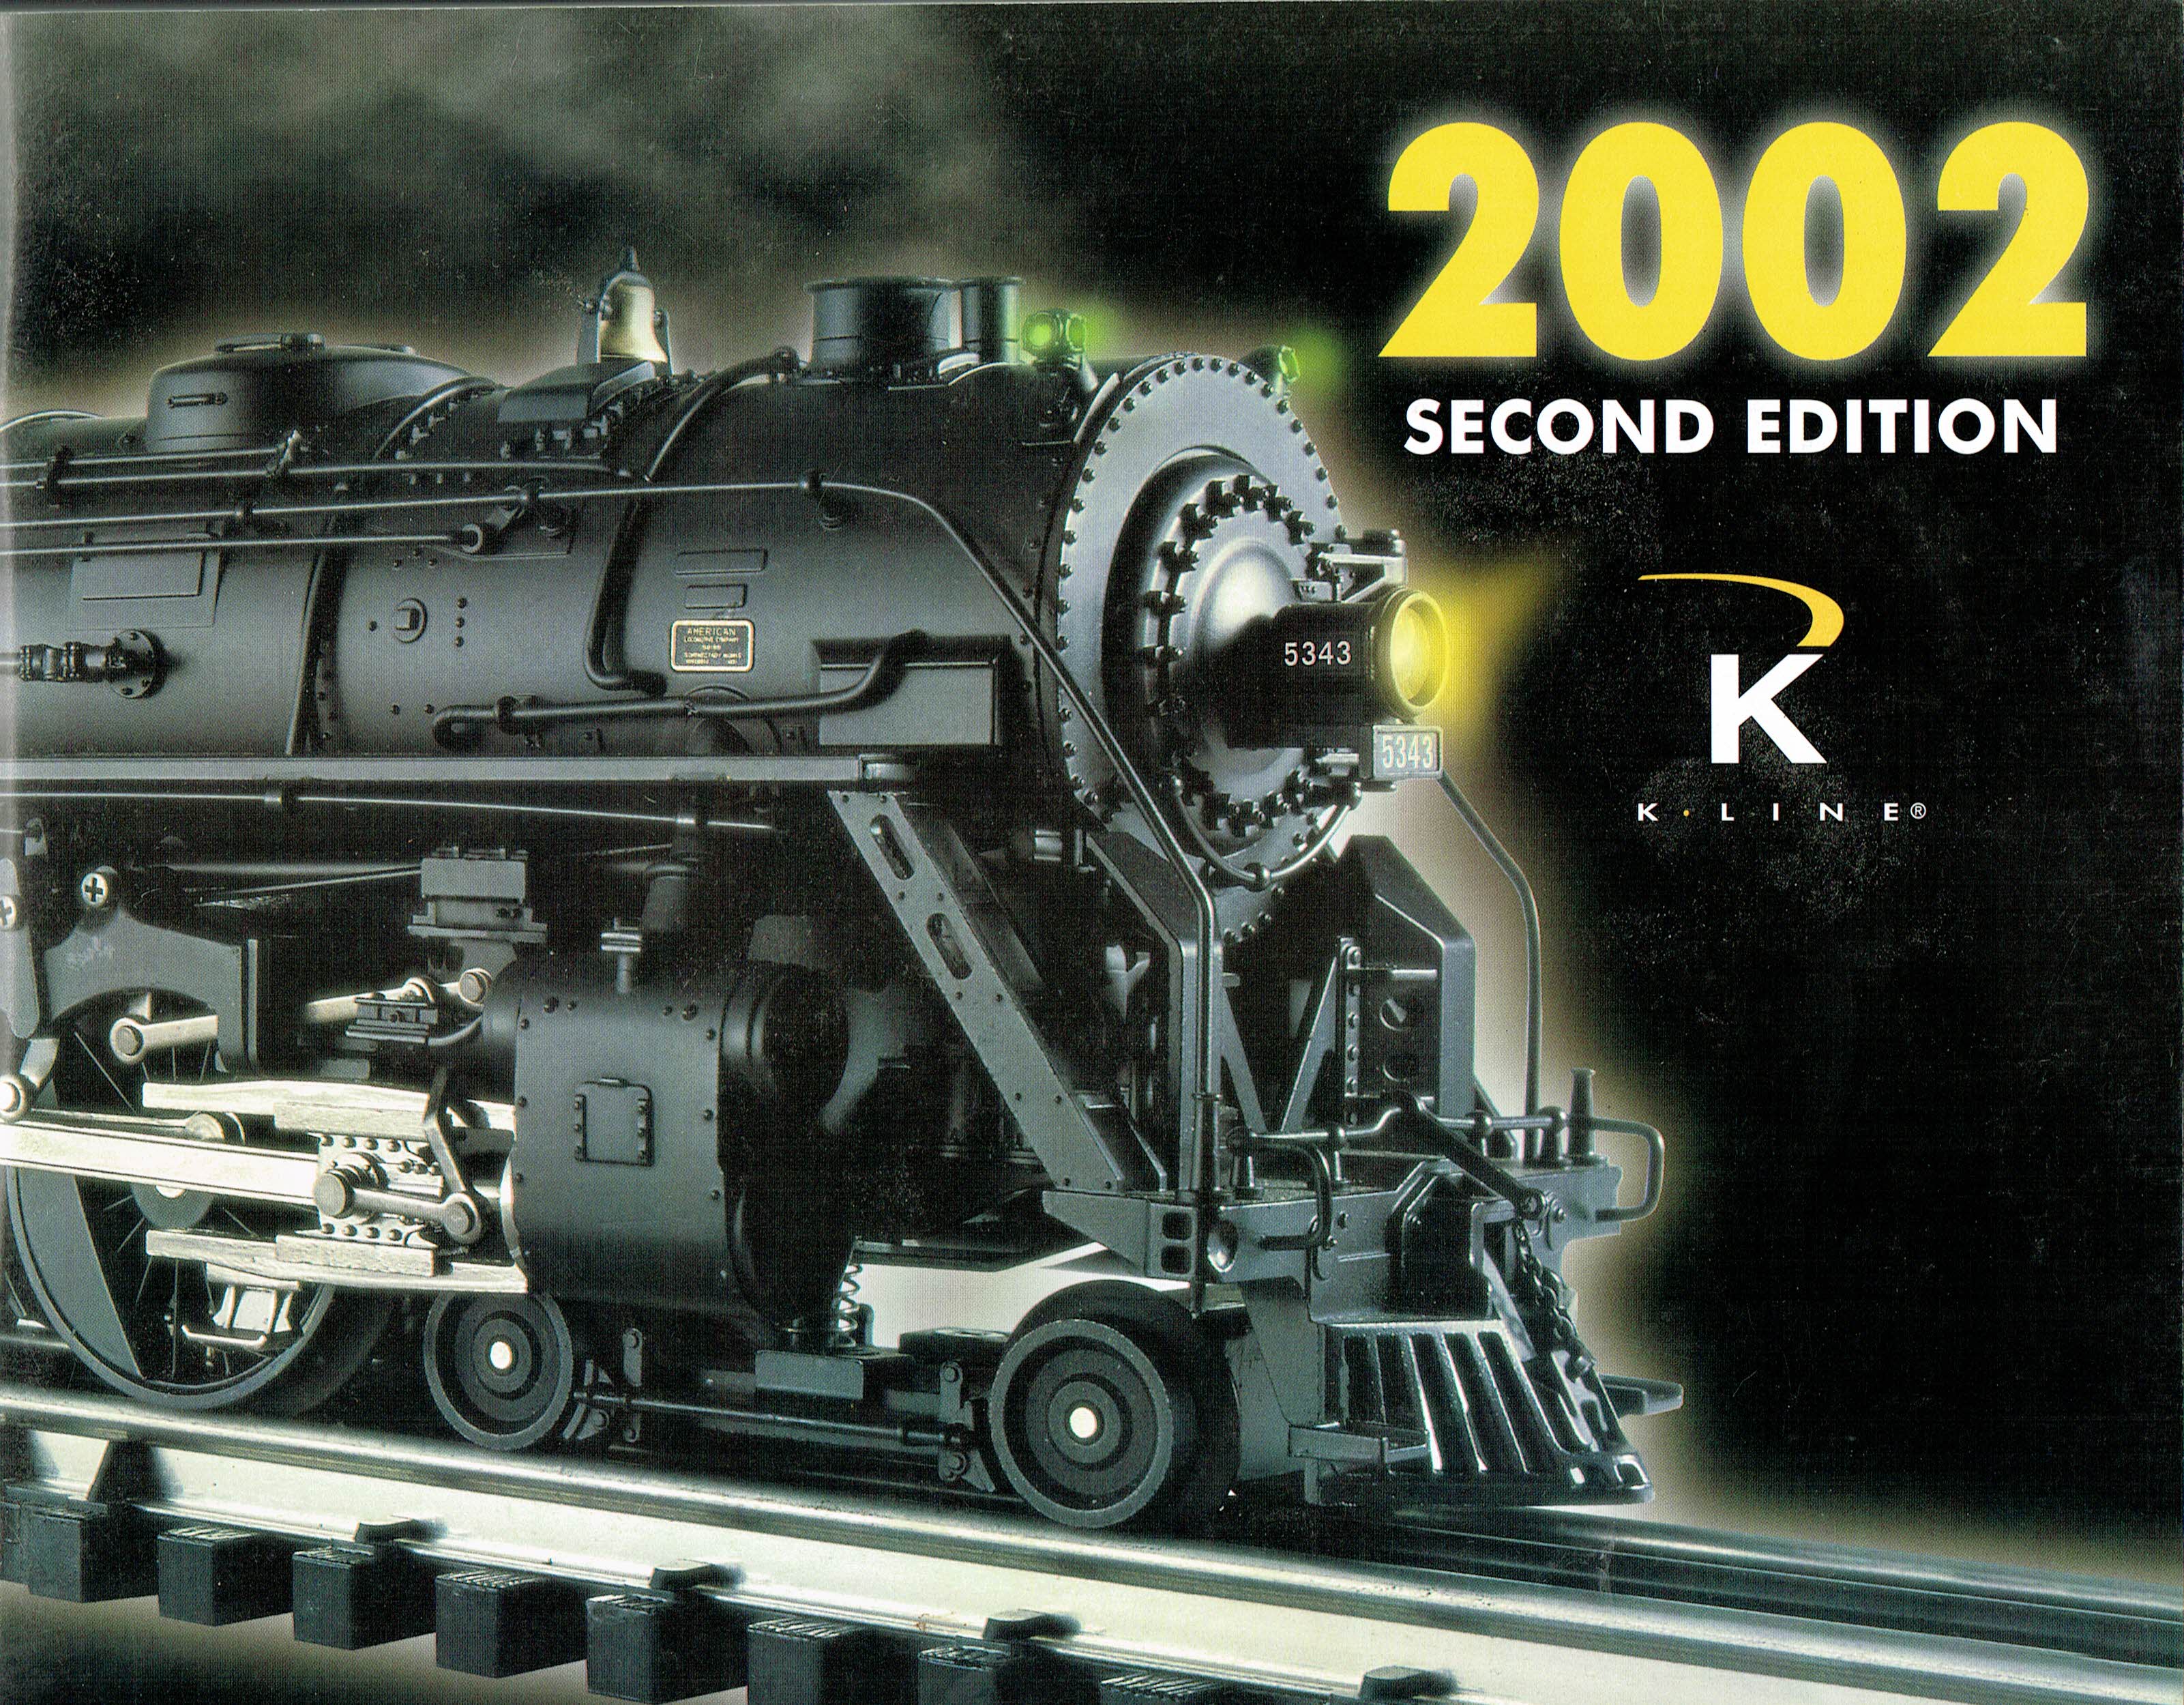 K-Line 2002 Second Edition Catalog image